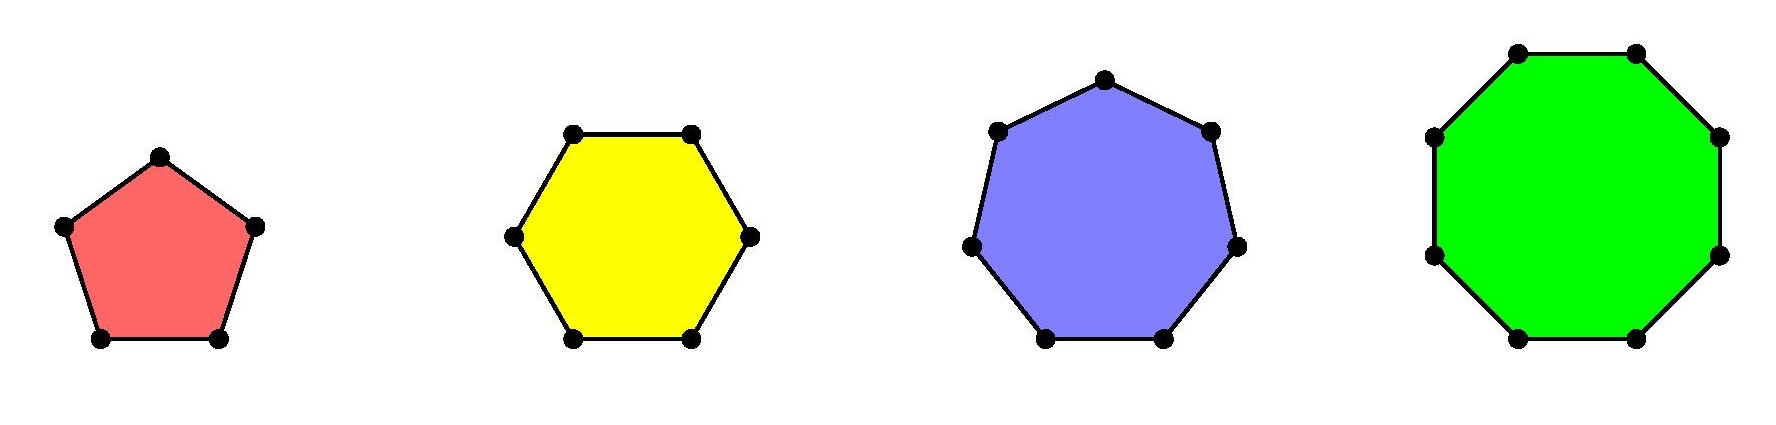 pentagon-hexagon-heptagon-octagon